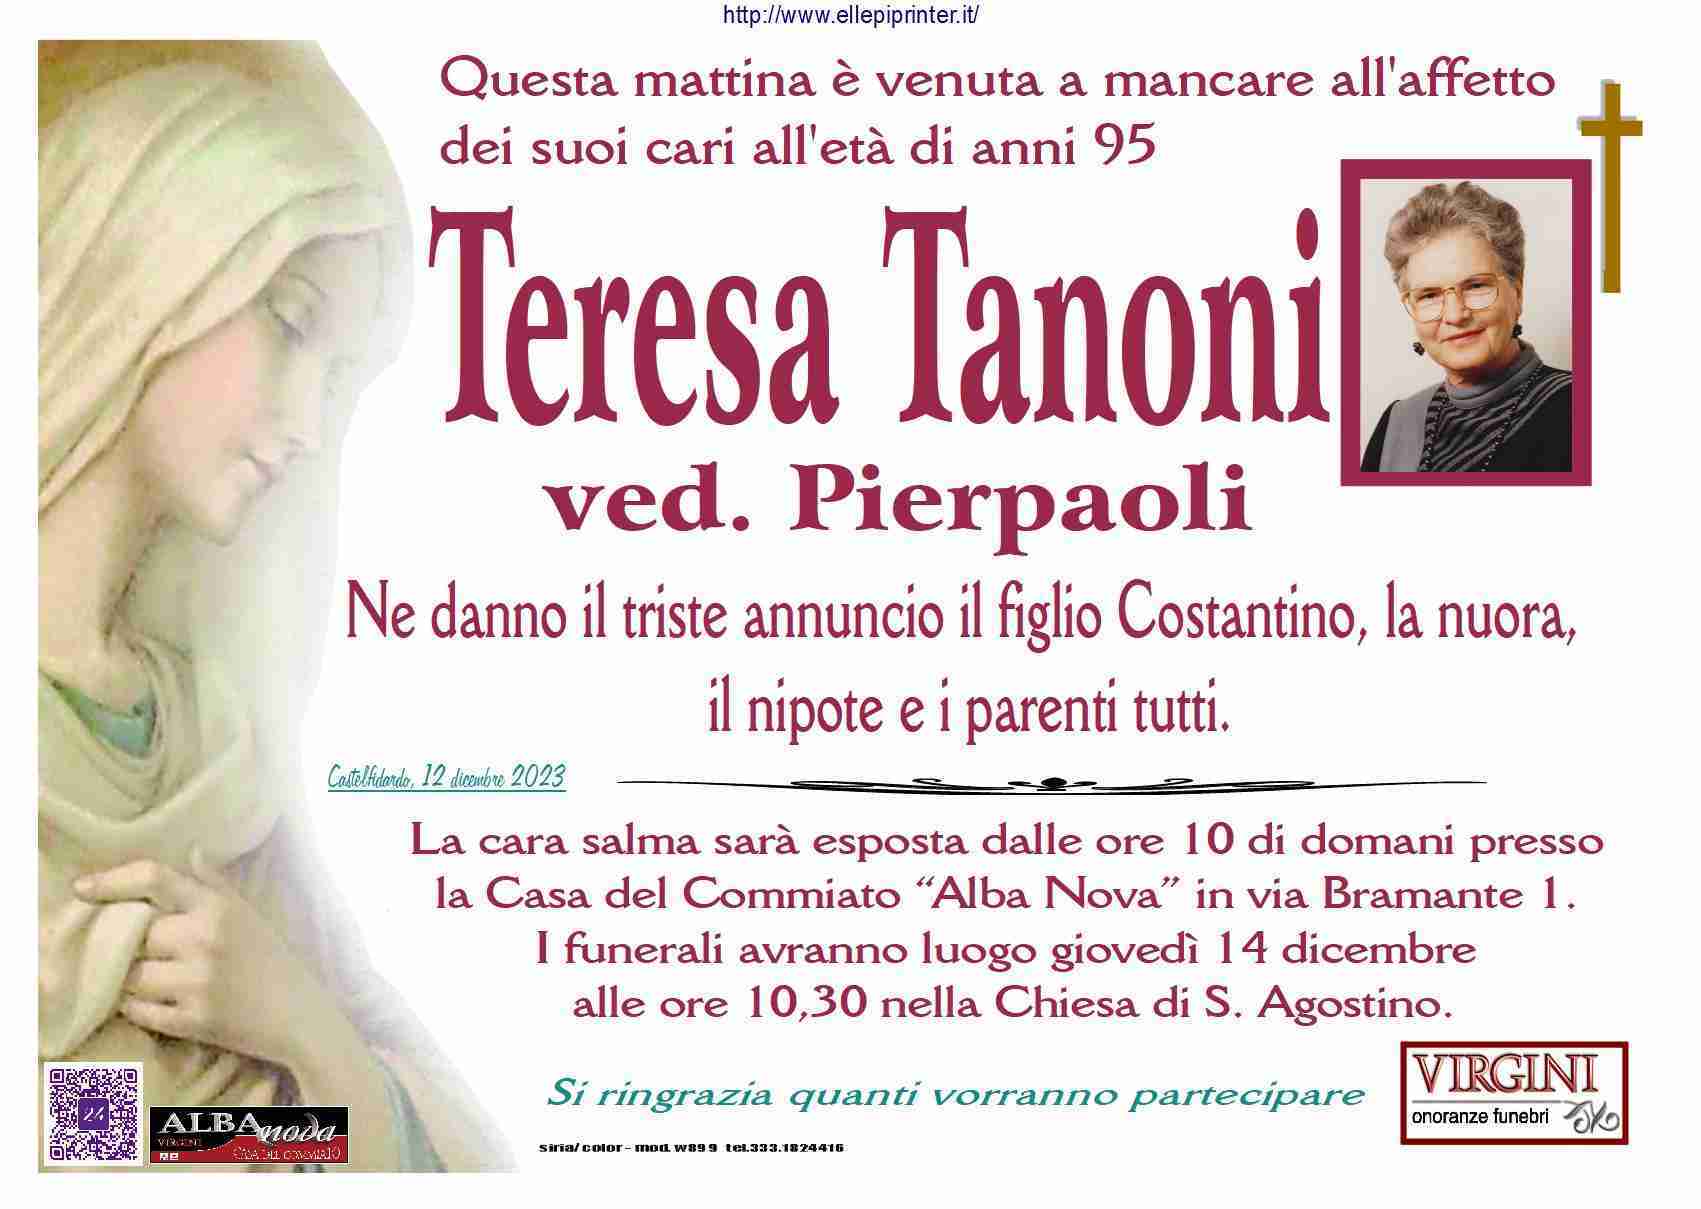 Teresa Tanoni